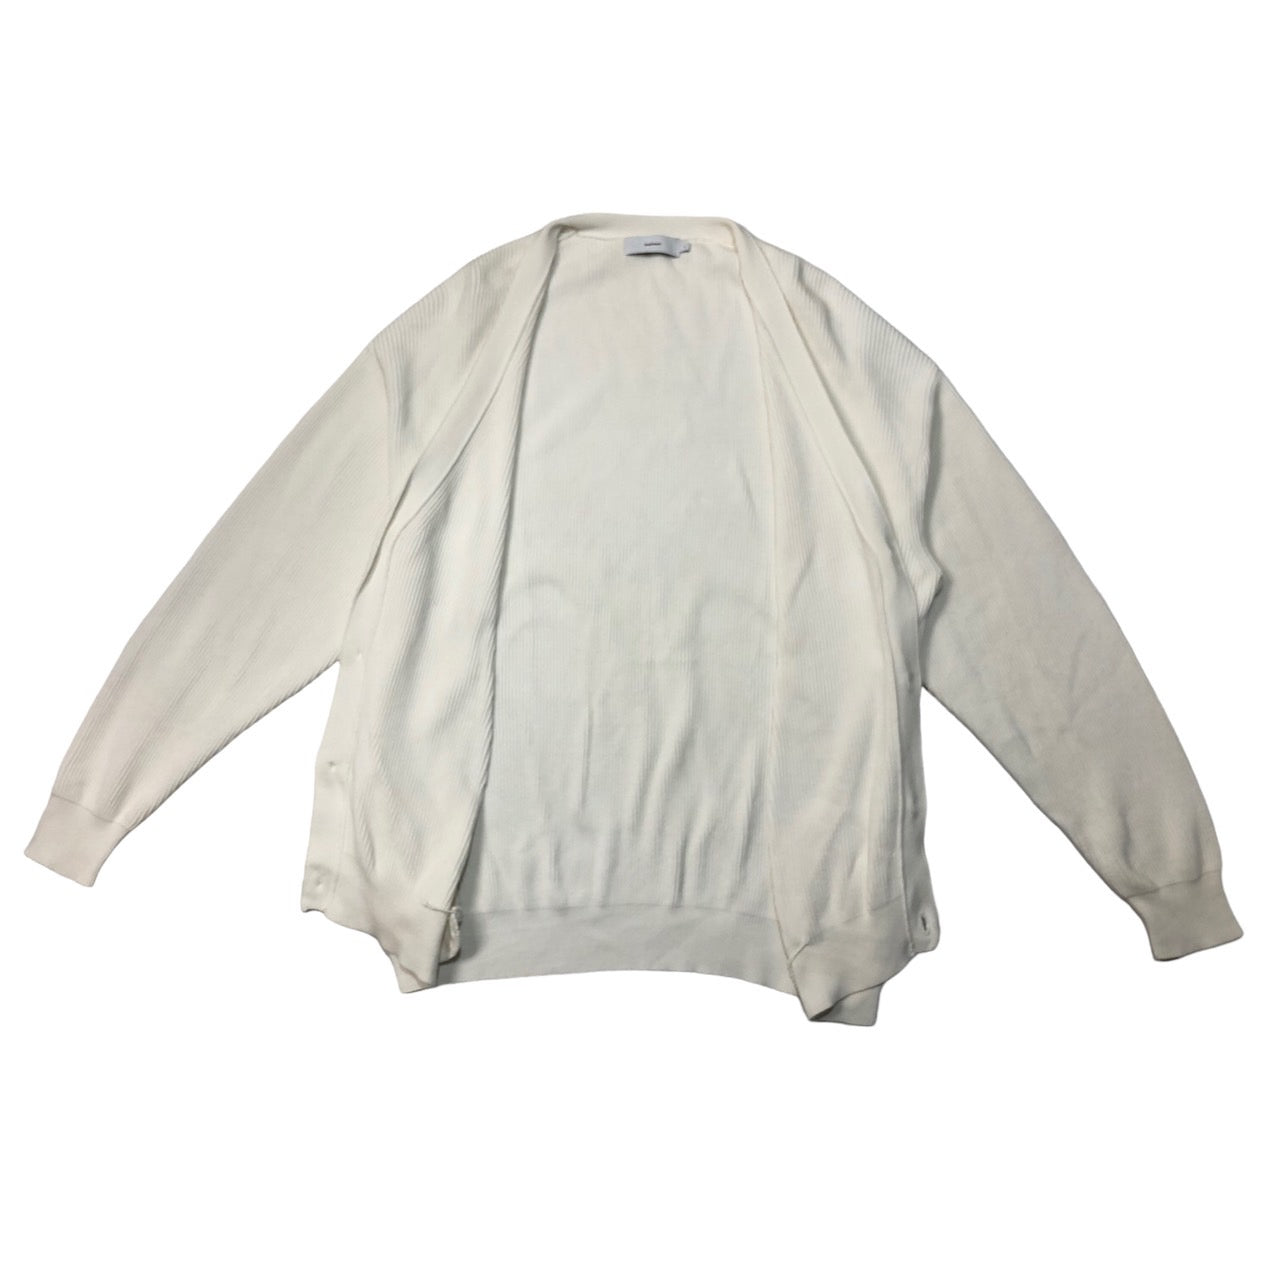 Graphpaper(グラフペーパー) High Density Cotton Knit Cardigan/高密度コットンニットカーディガン GM201-80075 SIZE 2(M) ホワイト 完売品